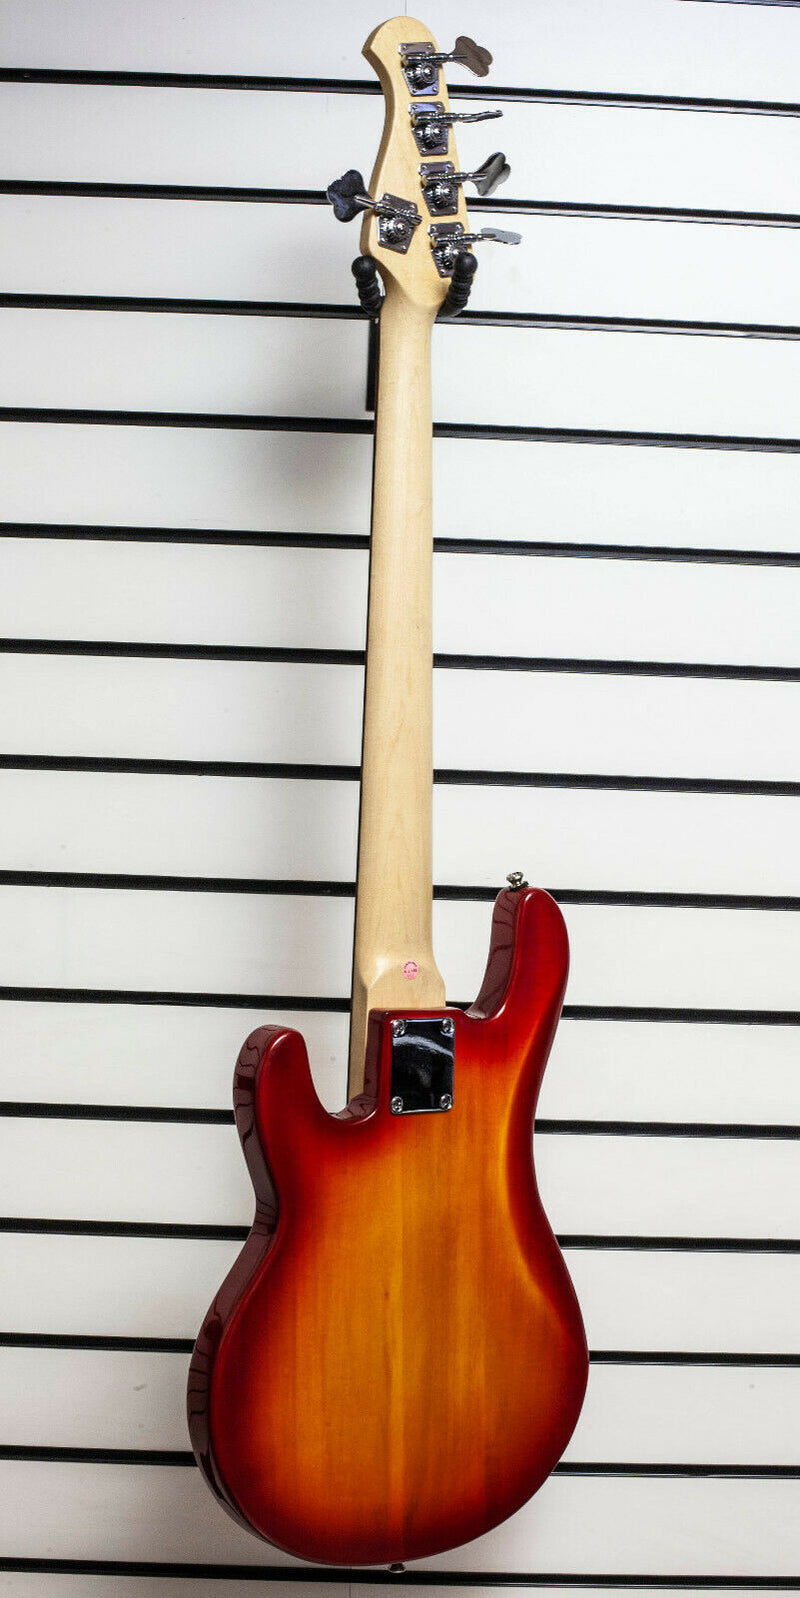 Tanglewood MM55 5 String Electric Bass Guitar Stingray Design Cherryburst